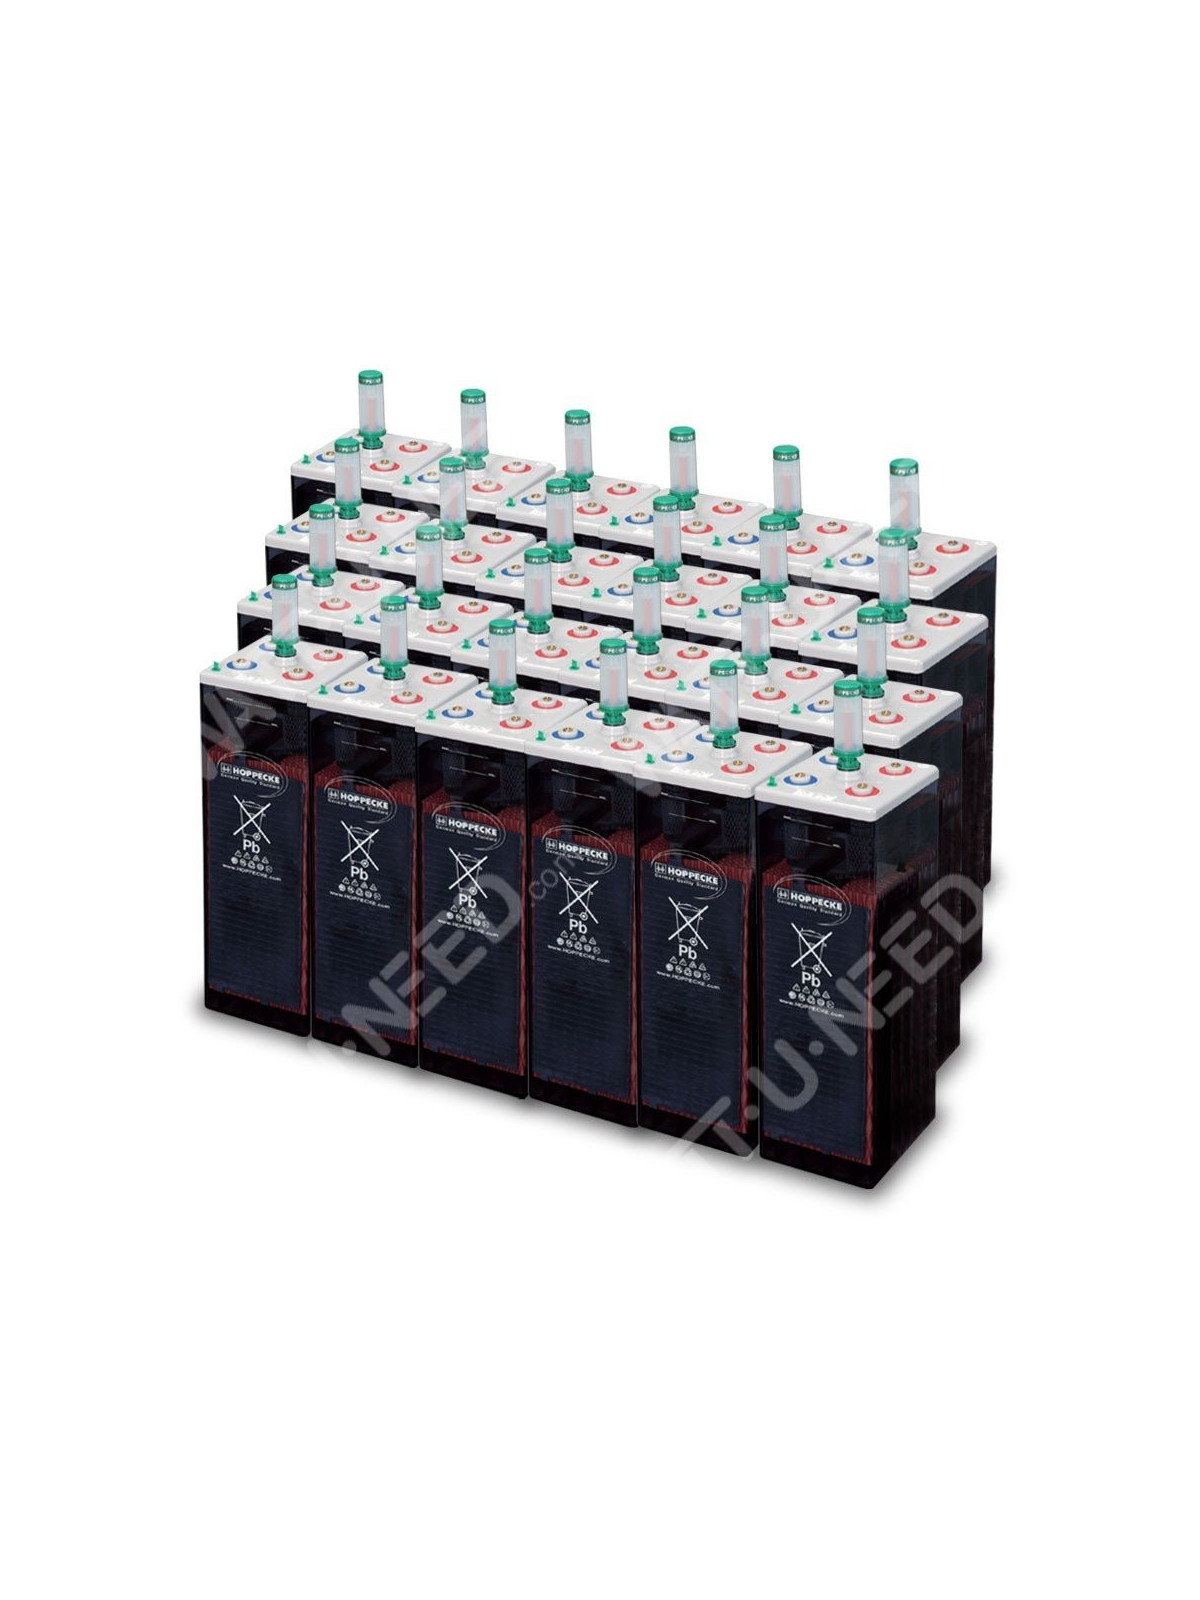 Kit de consumo de 72 paneles, 30 kva con almacenamiento